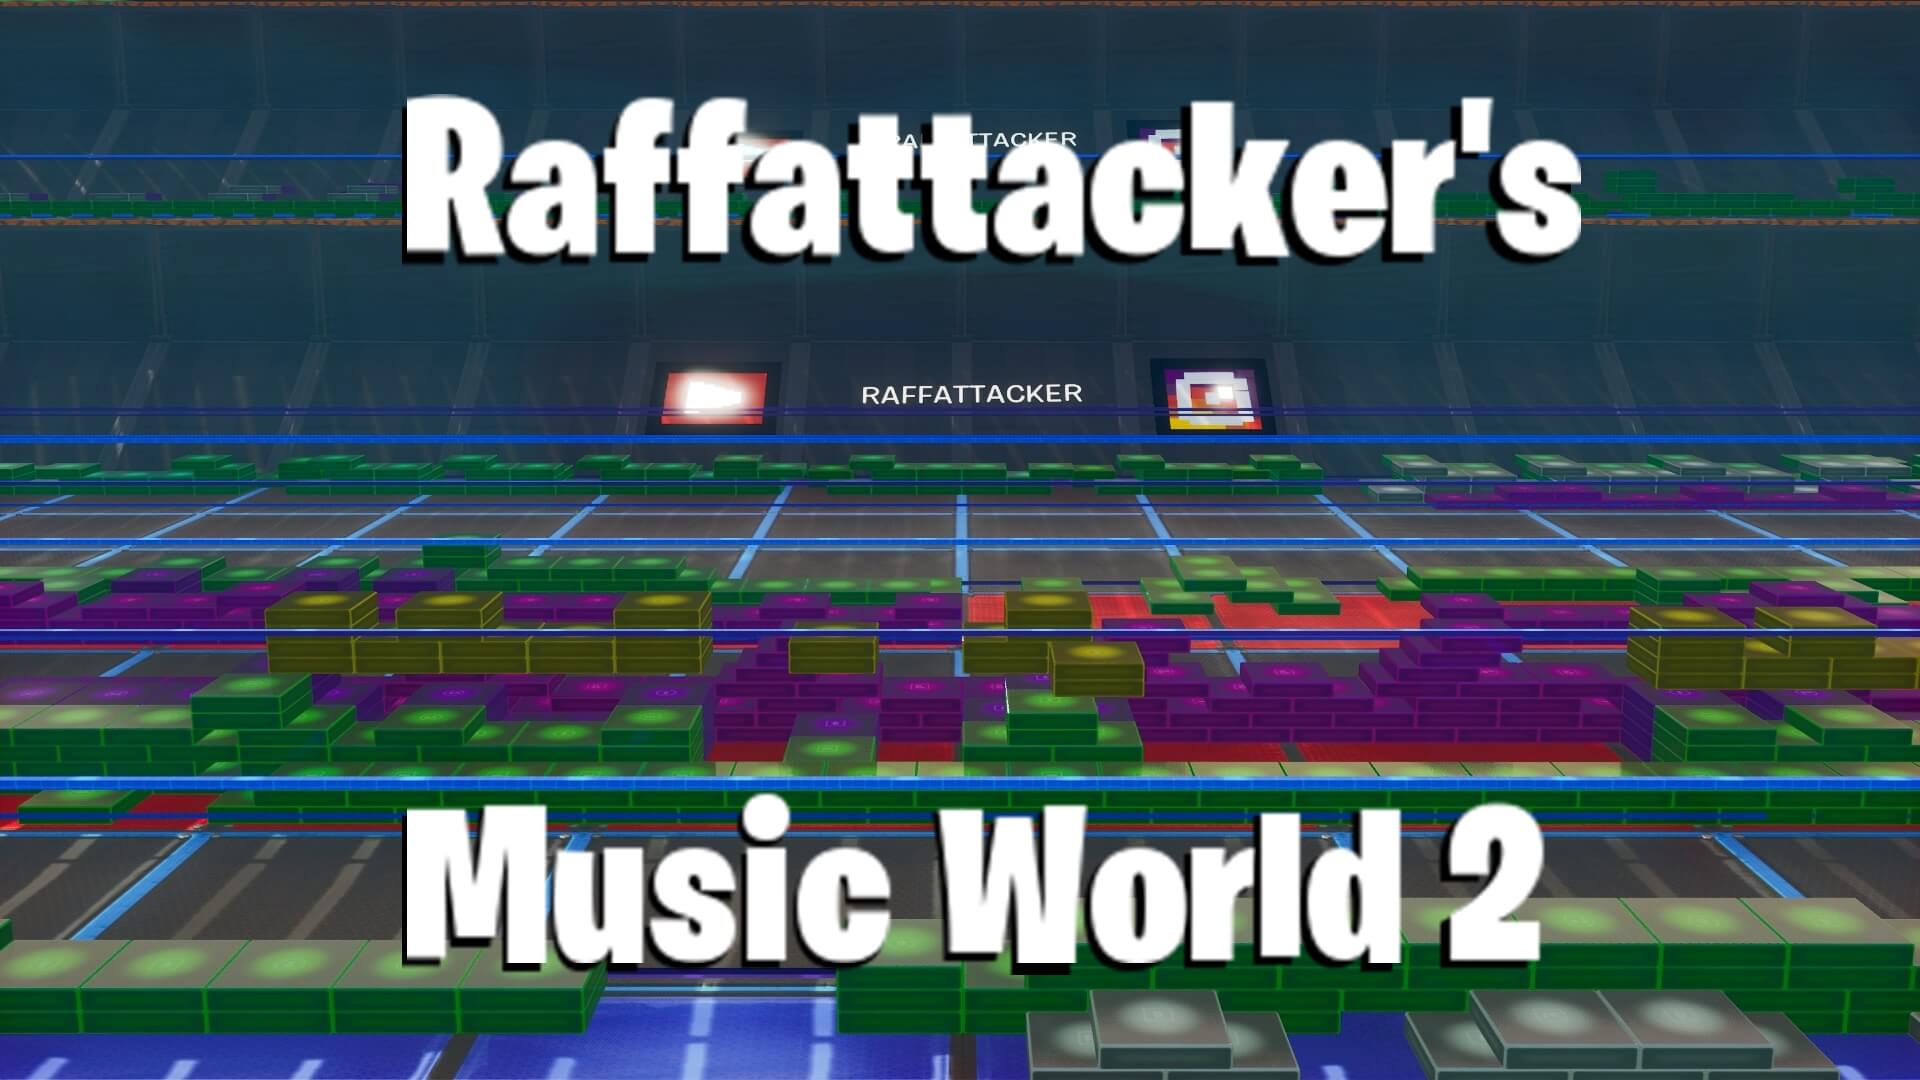 RAFFATTACKER'S MUSIC WORLD 2